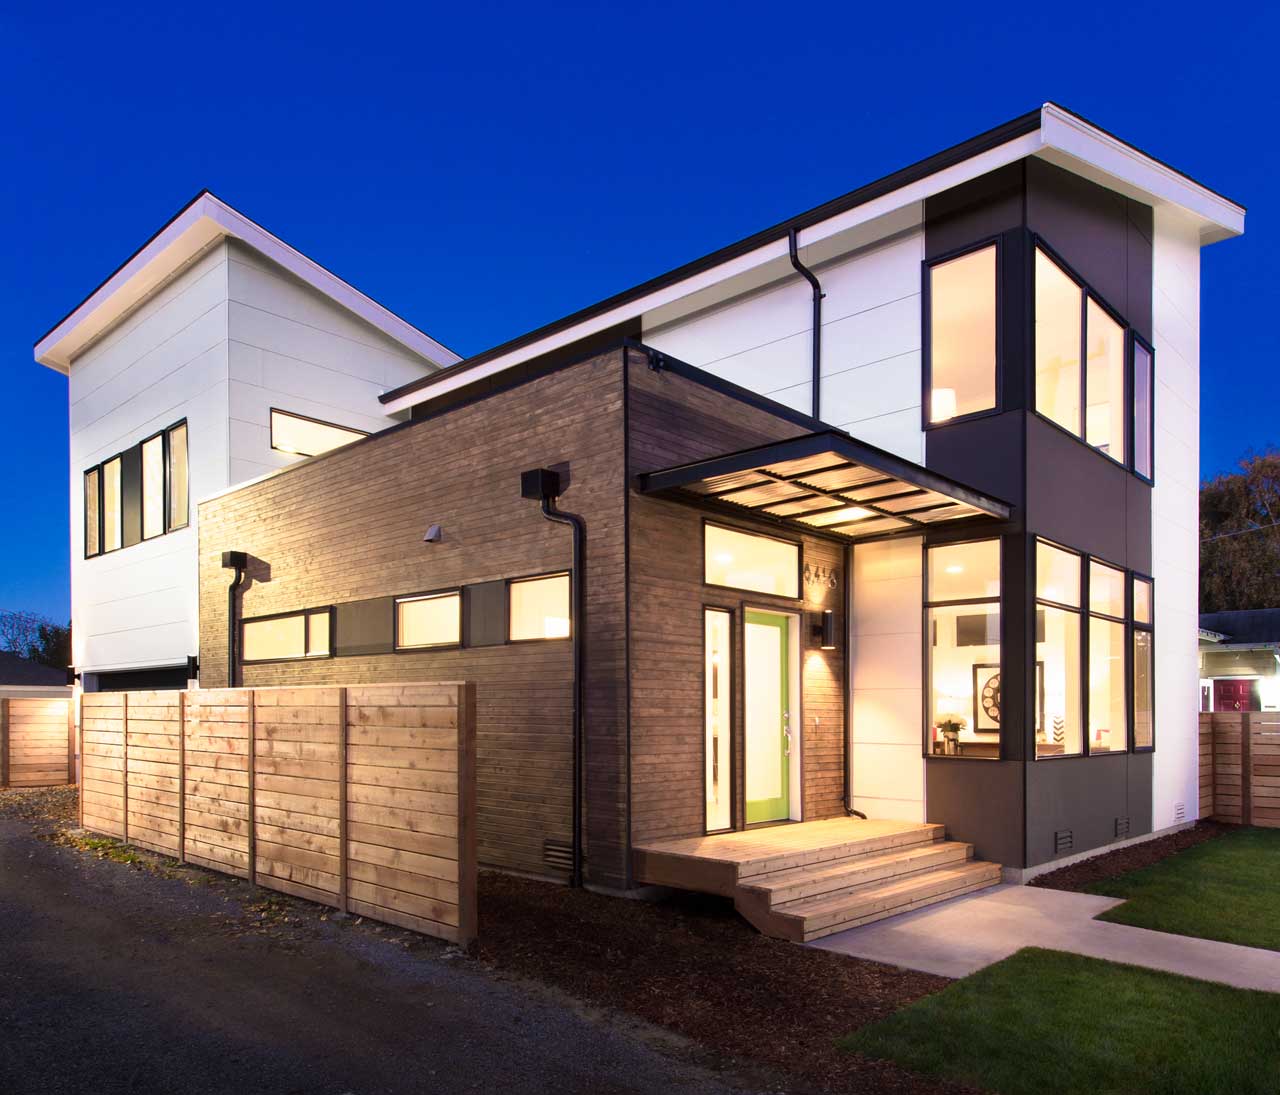 https://design-milk.com/images/2014/12/Alki-Beach-House-Seattle-Alloy-Design-Group-2.jpg